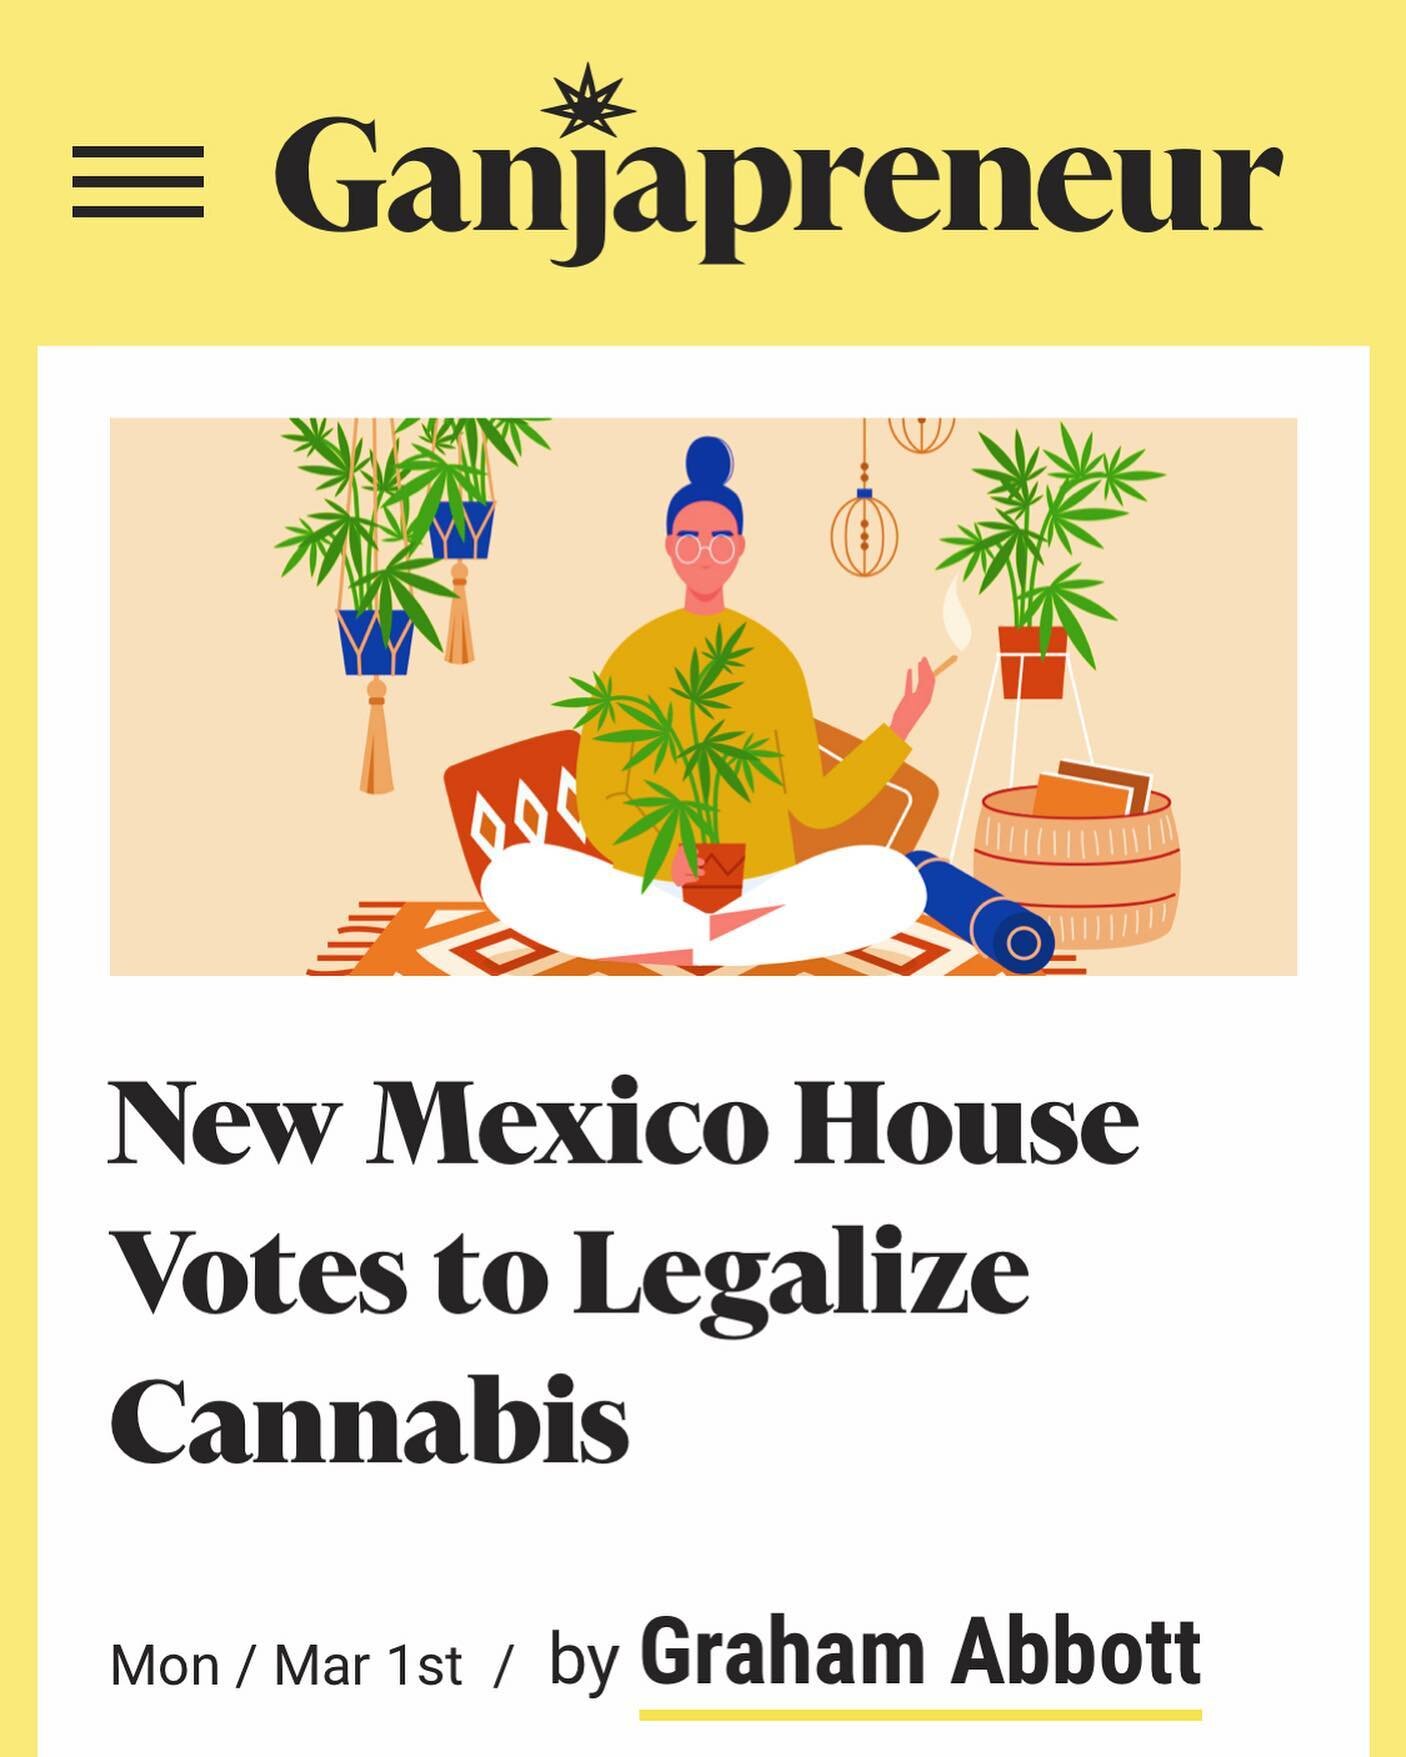 Via @ganjapreneur #cannabisnews 

#newmexico #cannabislegalization